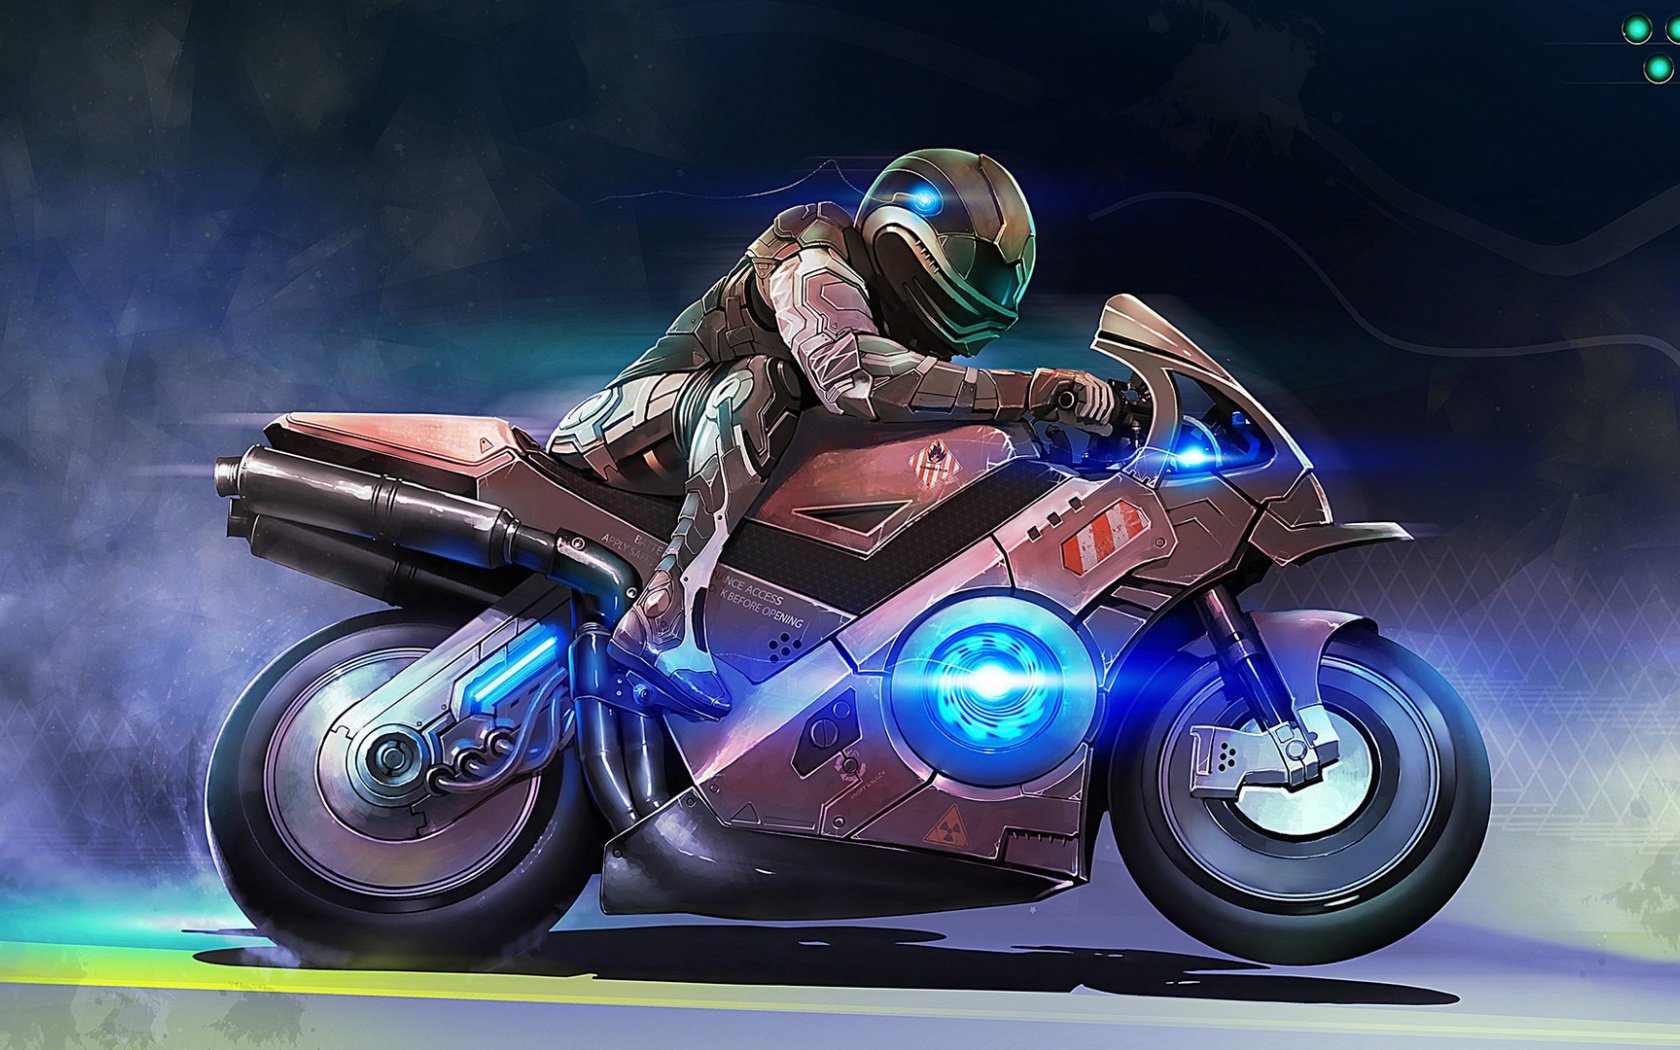 Description Cool Motorcycle Art Wallpaper Desktop